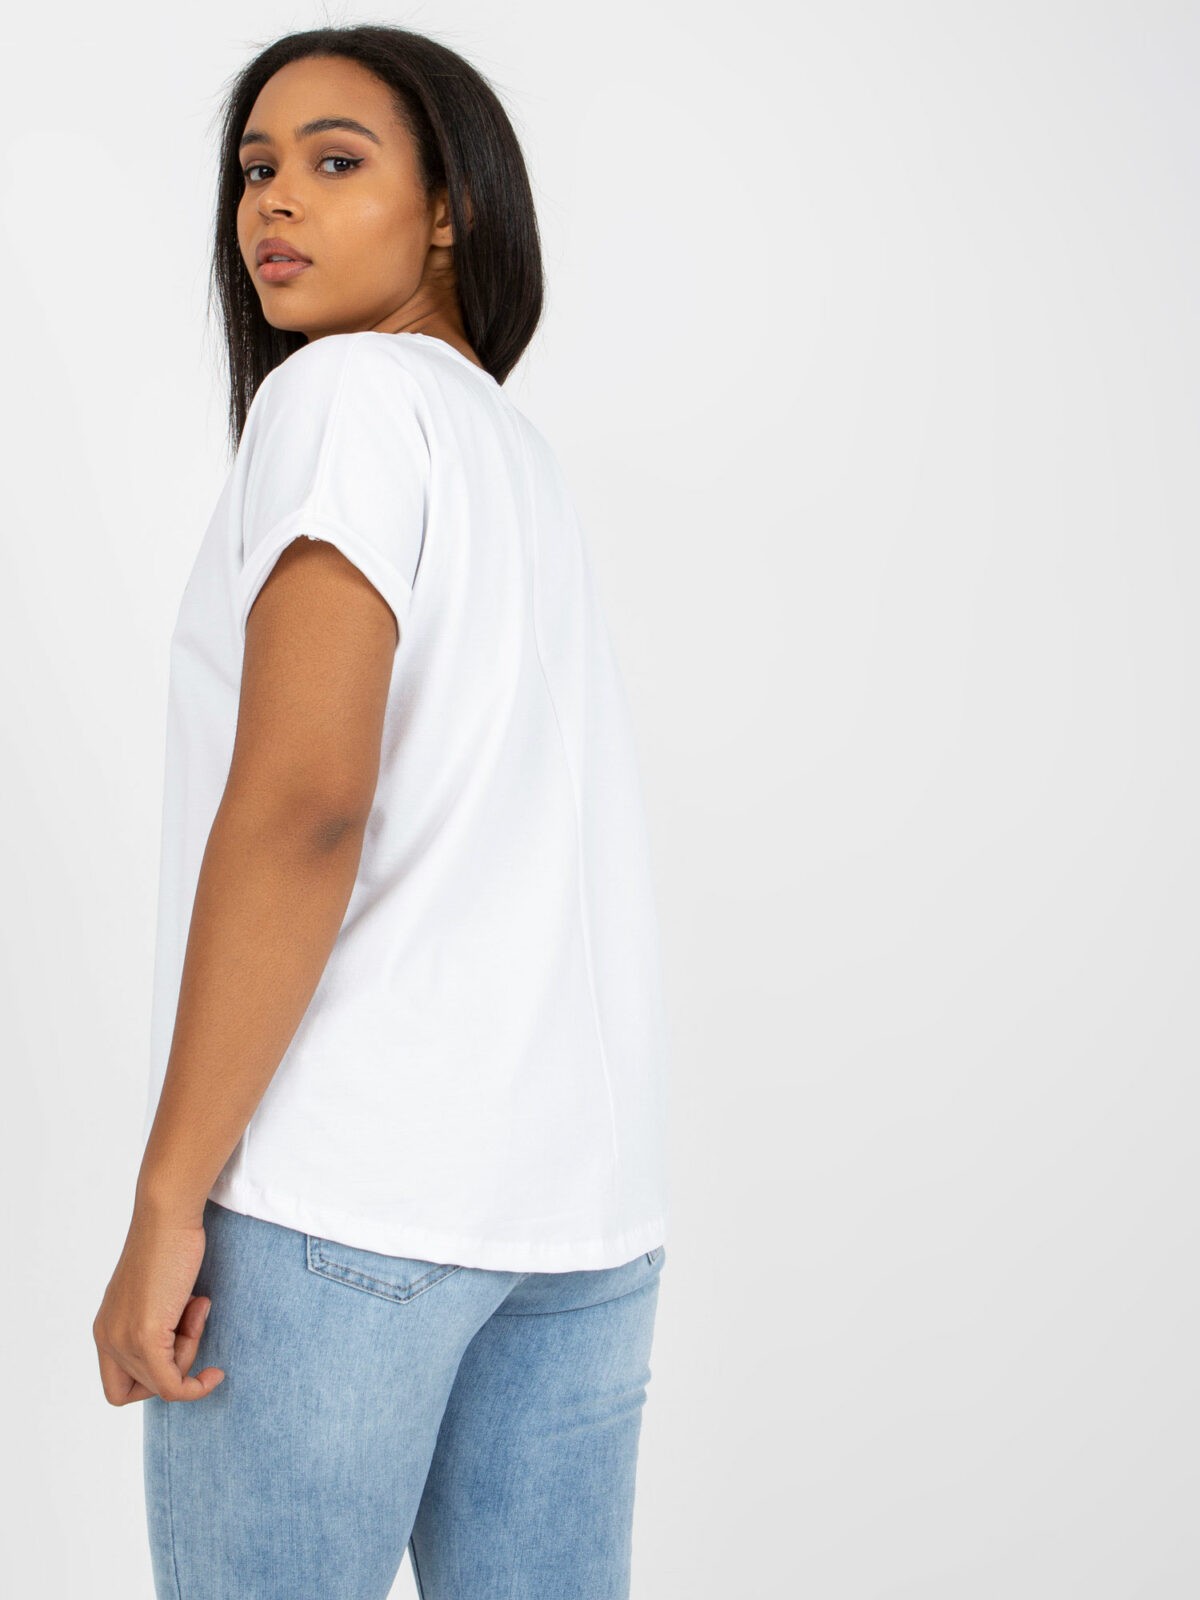 Bílé tričko plus velikosti s